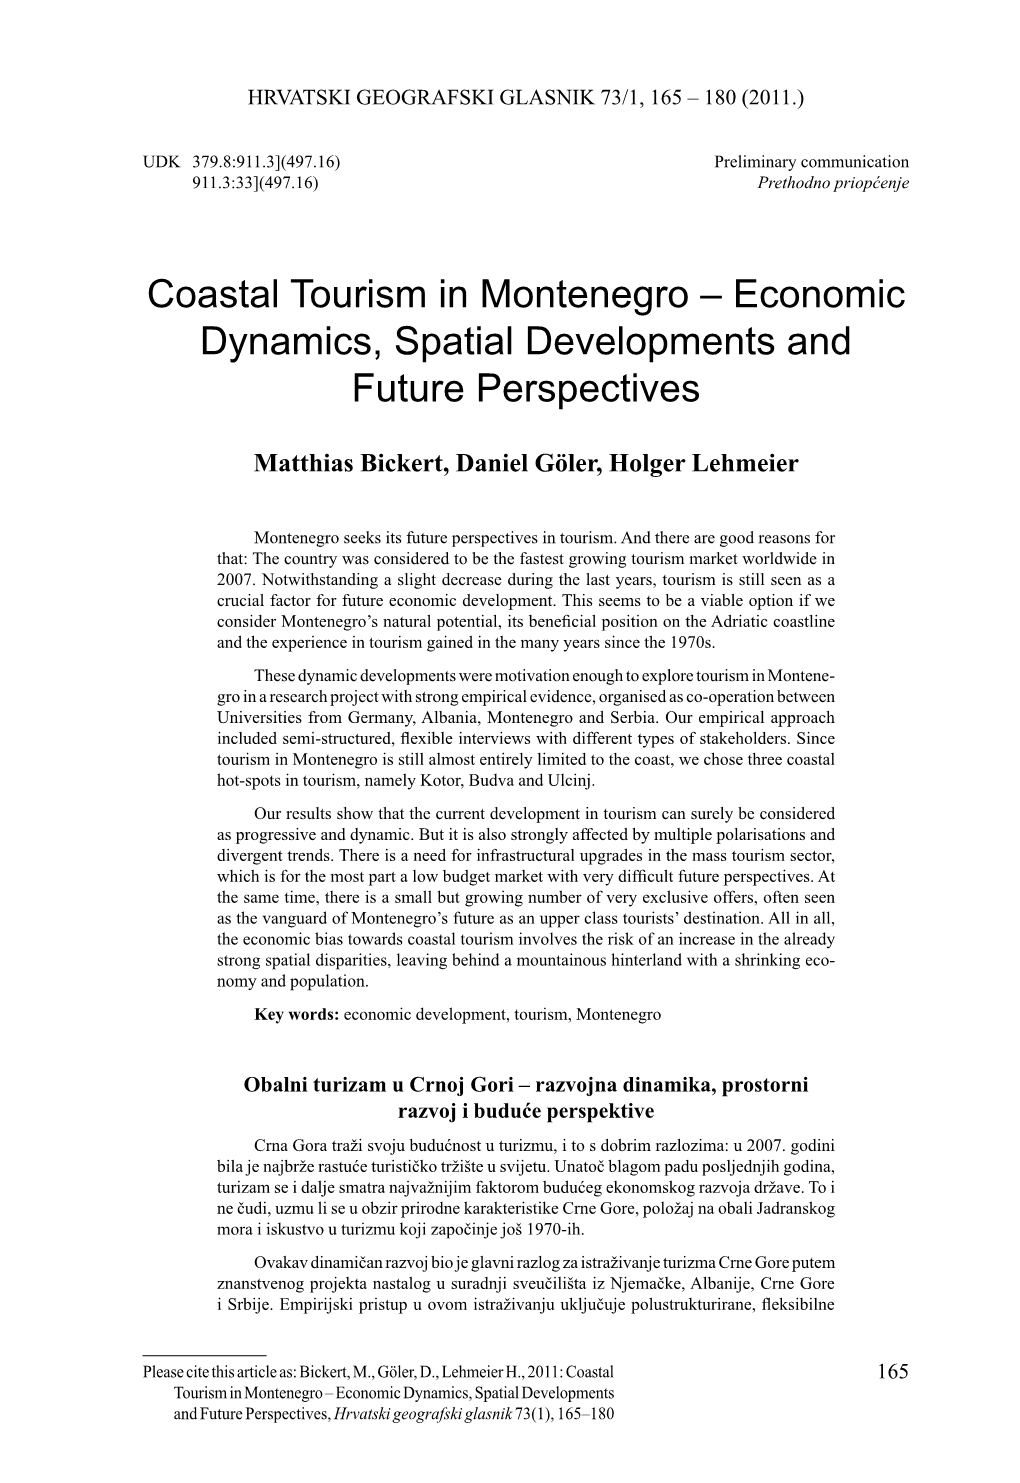 Coastal Tourism in Montenegro – Economic Dynamics, Spatial Developments and Future Perspectives